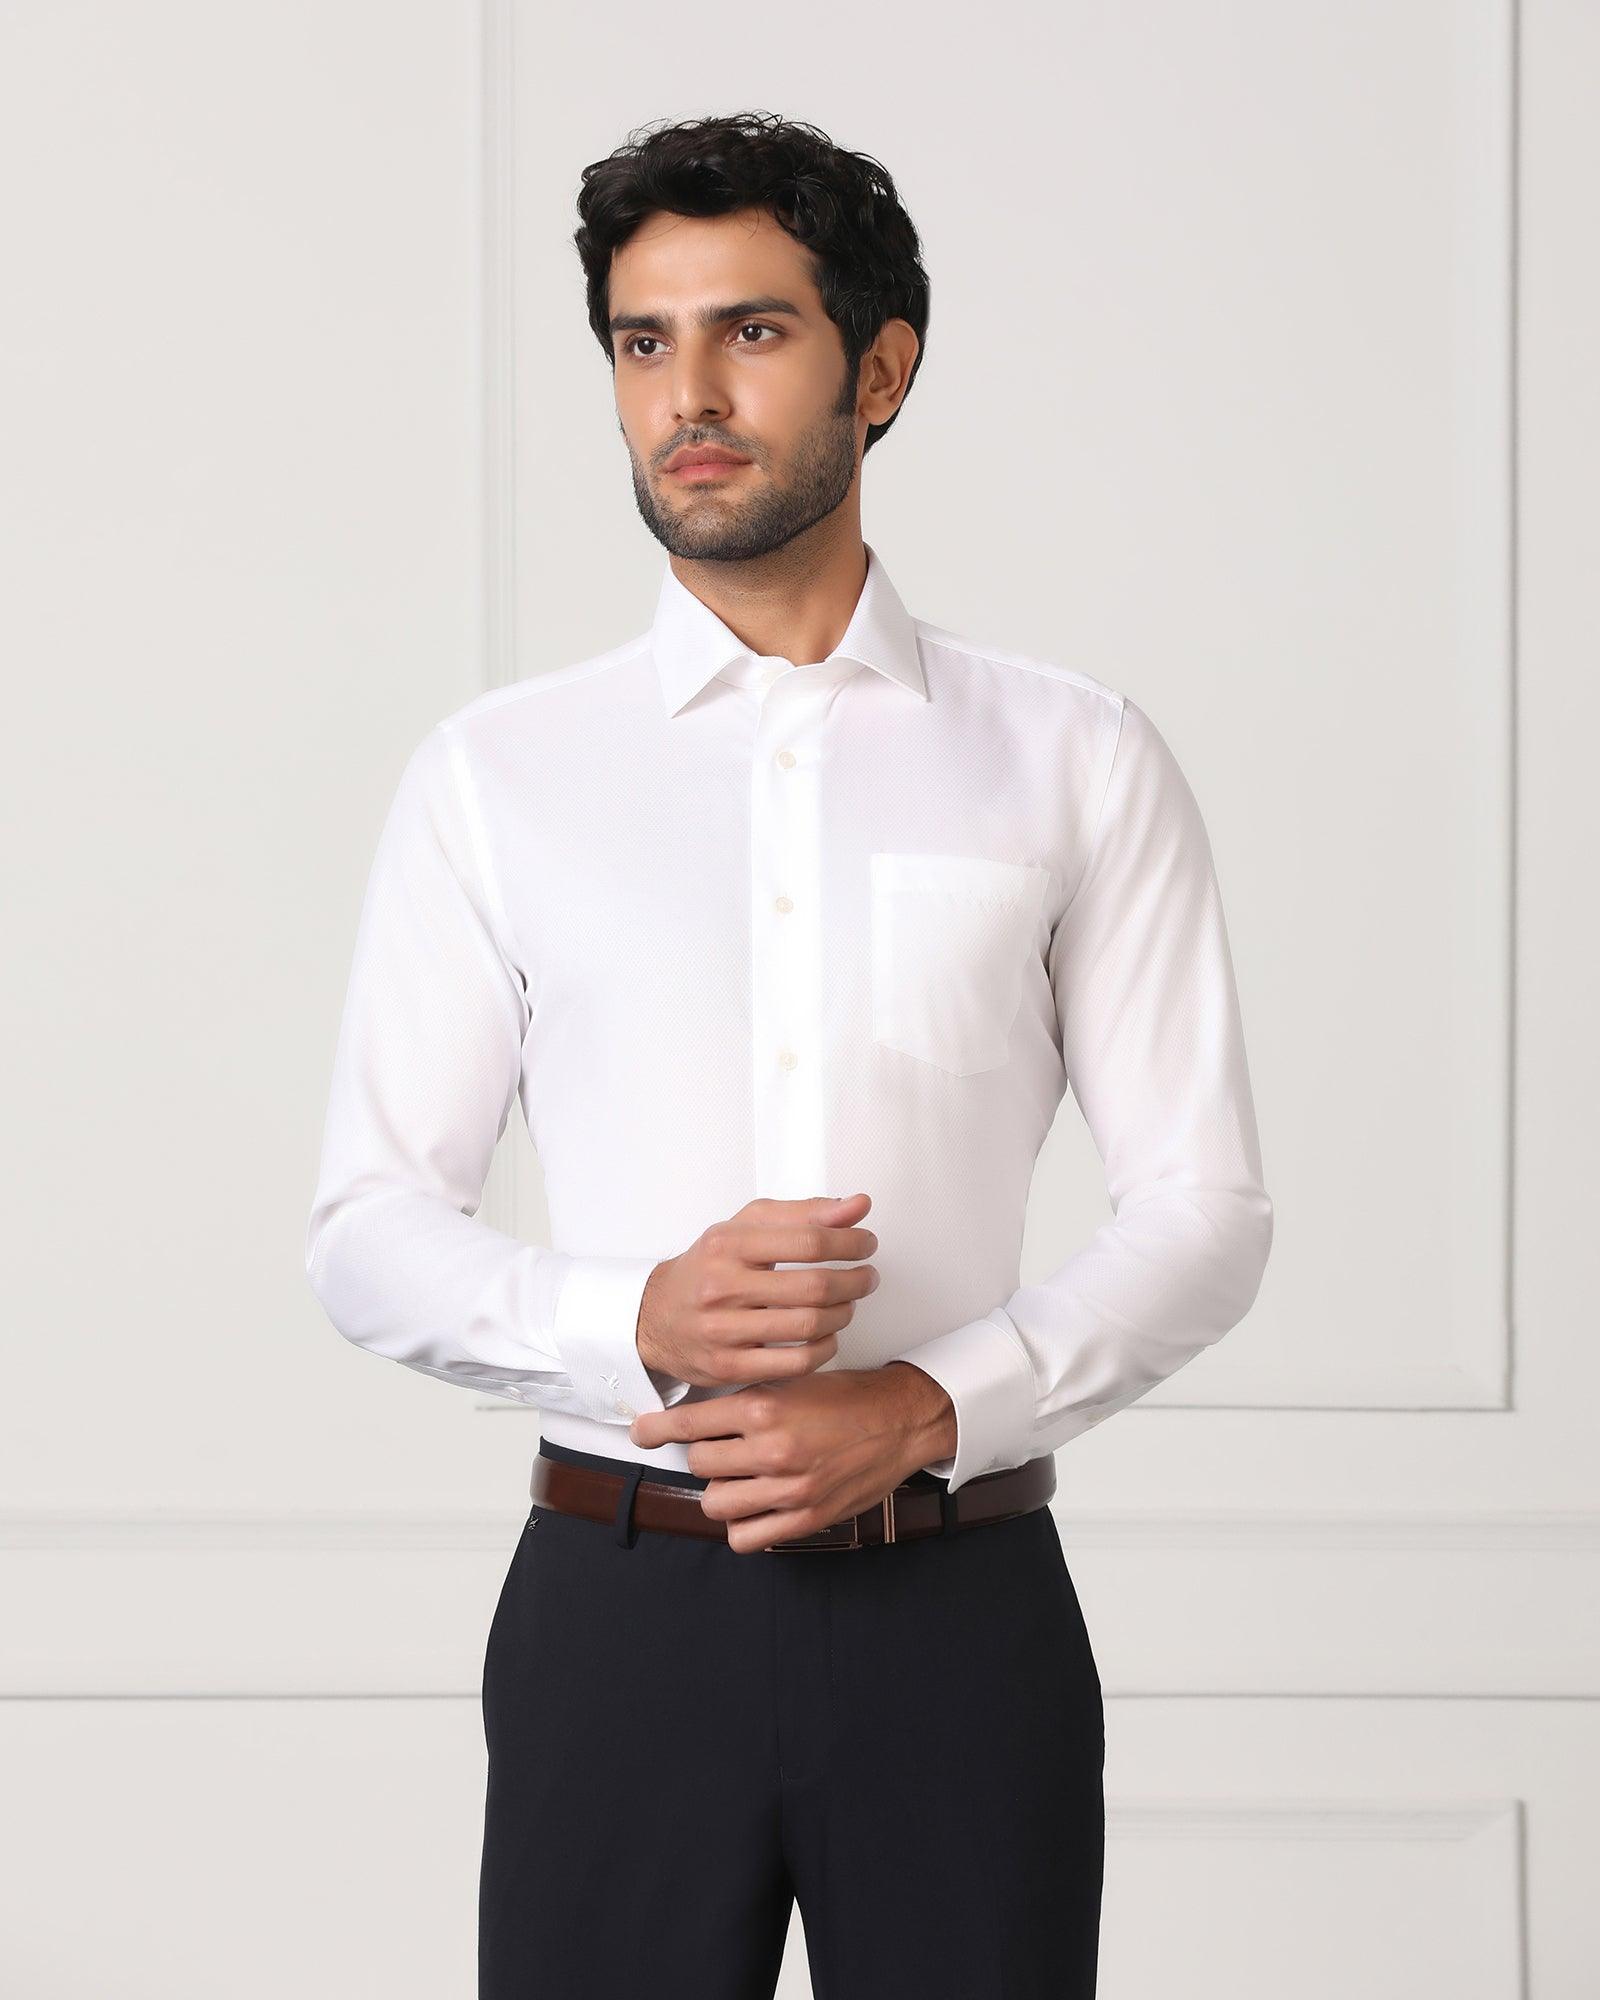 SLIM FIT Cover Shirt in white plain, white, long sleeve, 42